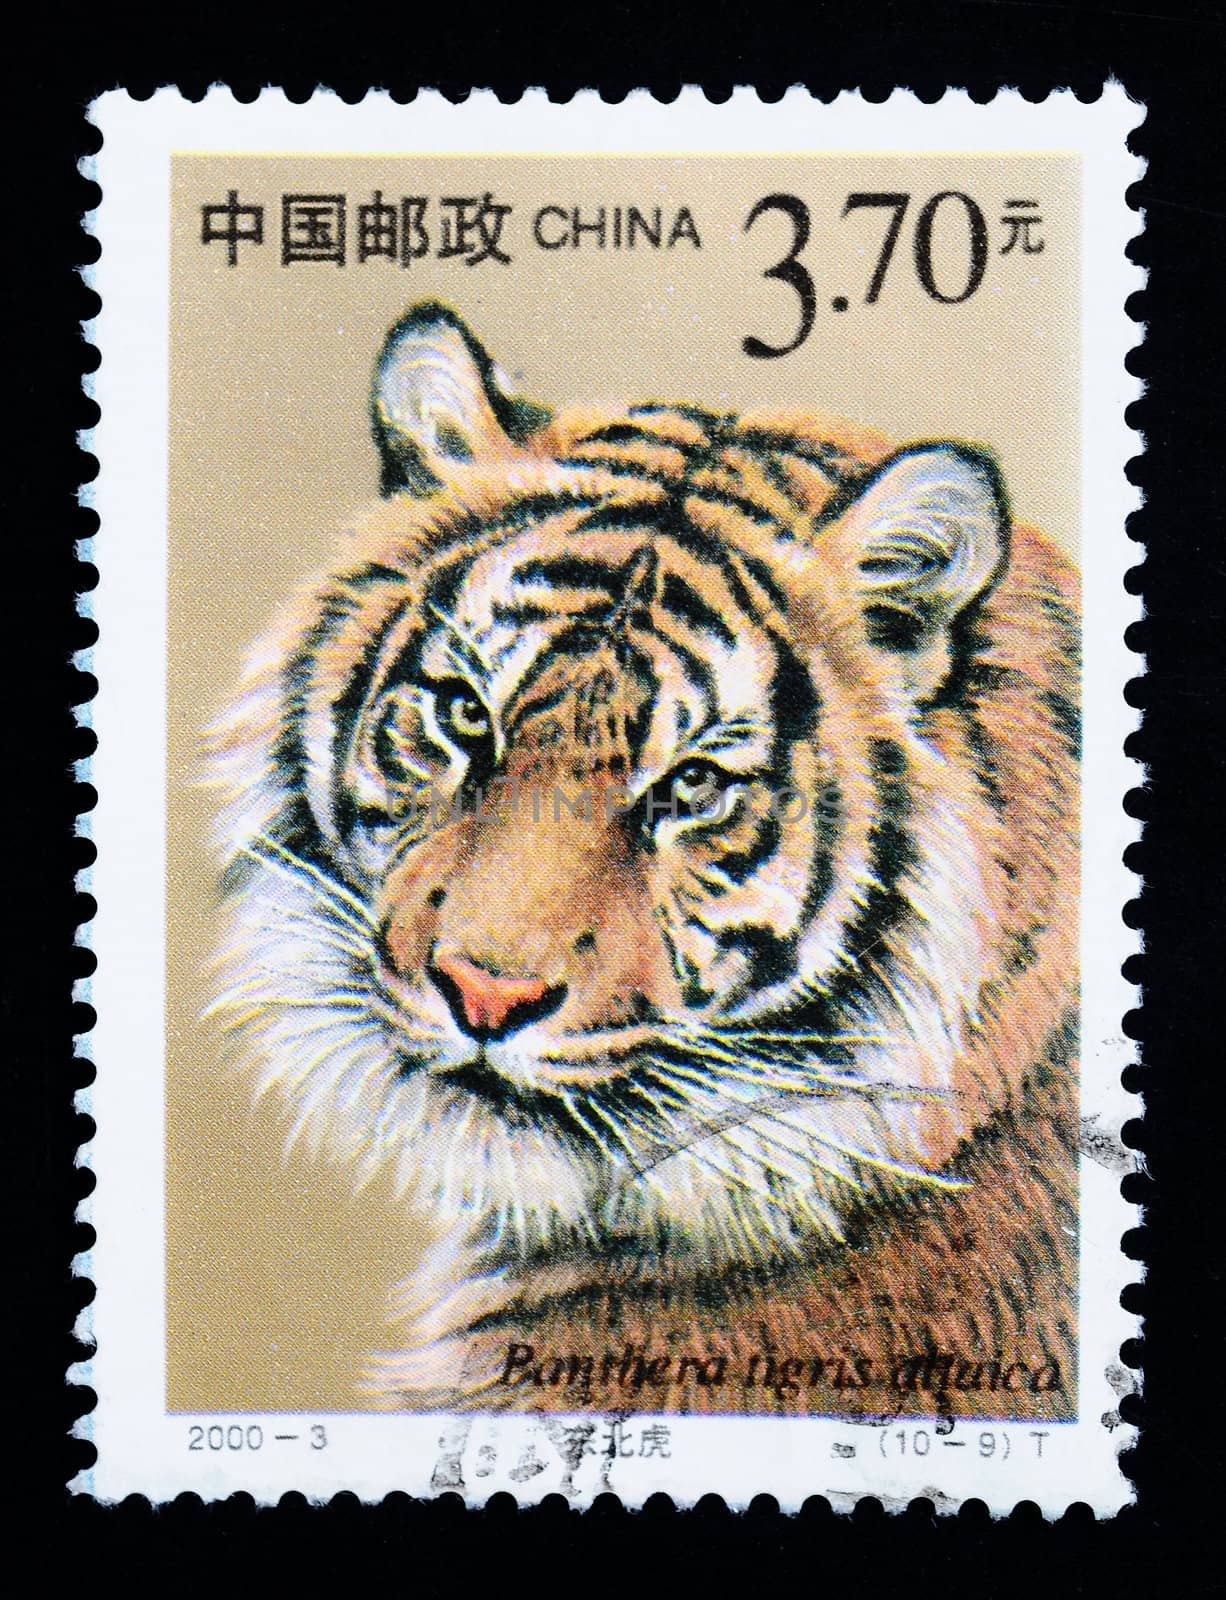 CHINA - CIRCA 2000: A stamp printed in China shows Panthera tigris altaica, series, circa 2000 